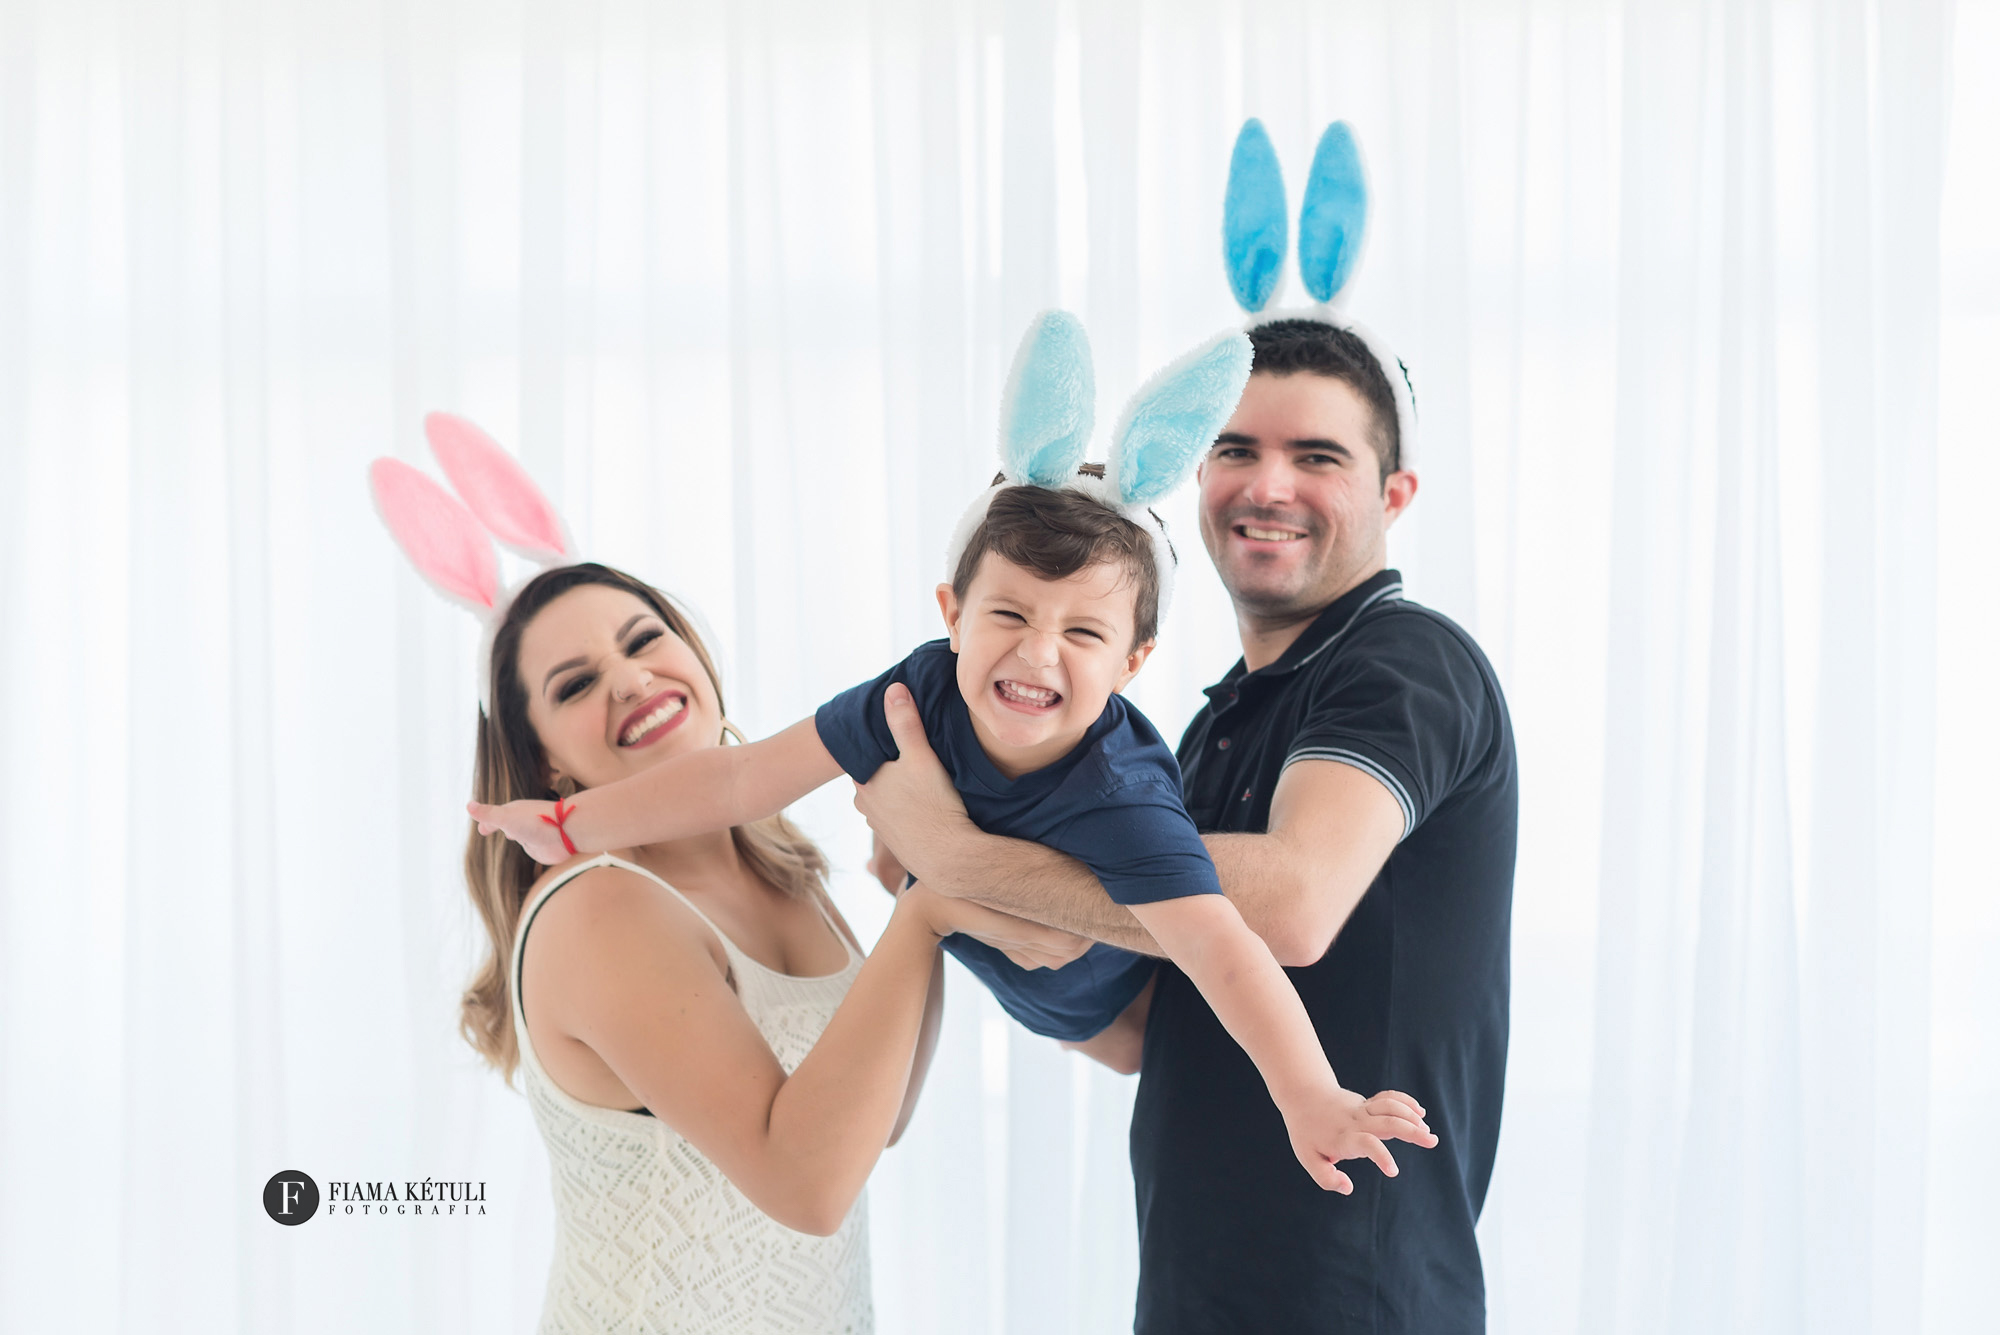 Ensaio família tema páscoa em Brasília 2020